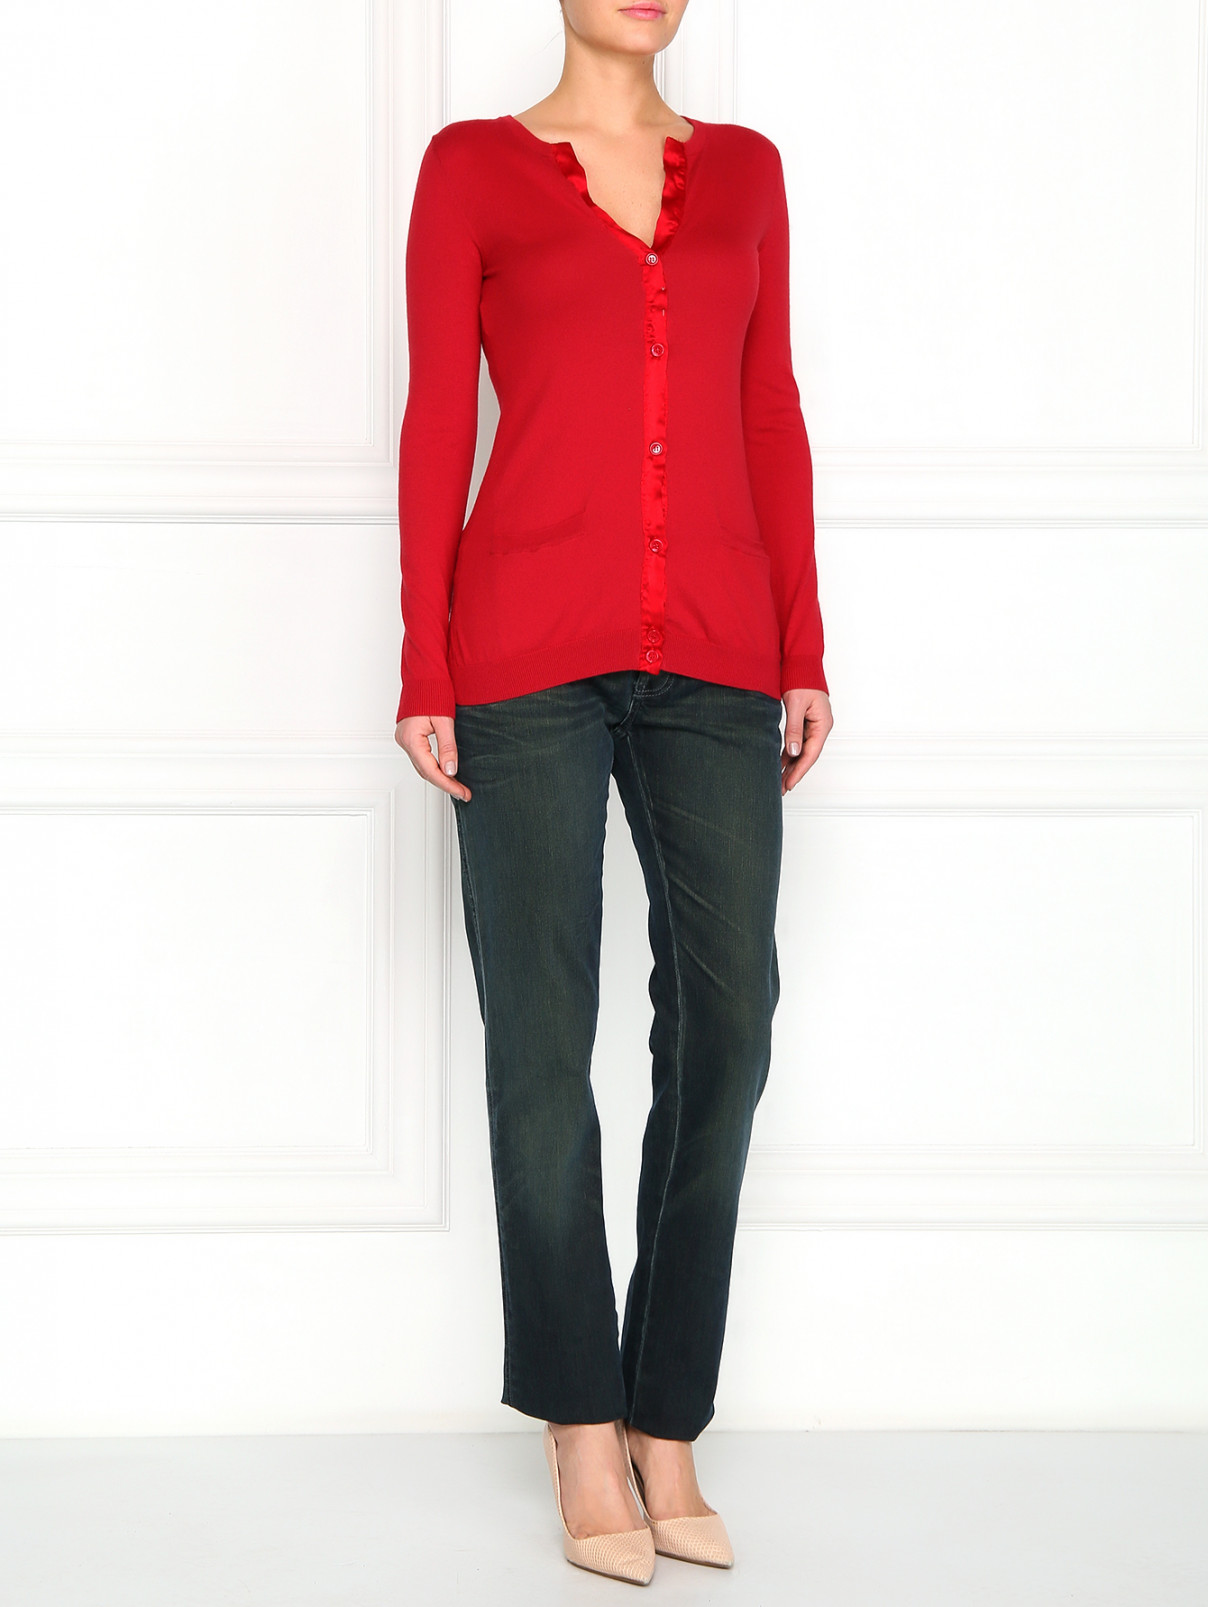 Кардиган из шелка и хлопка на пуговицах Moschino Cheap&Chic  –  Модель Общий вид  – Цвет:  Красный